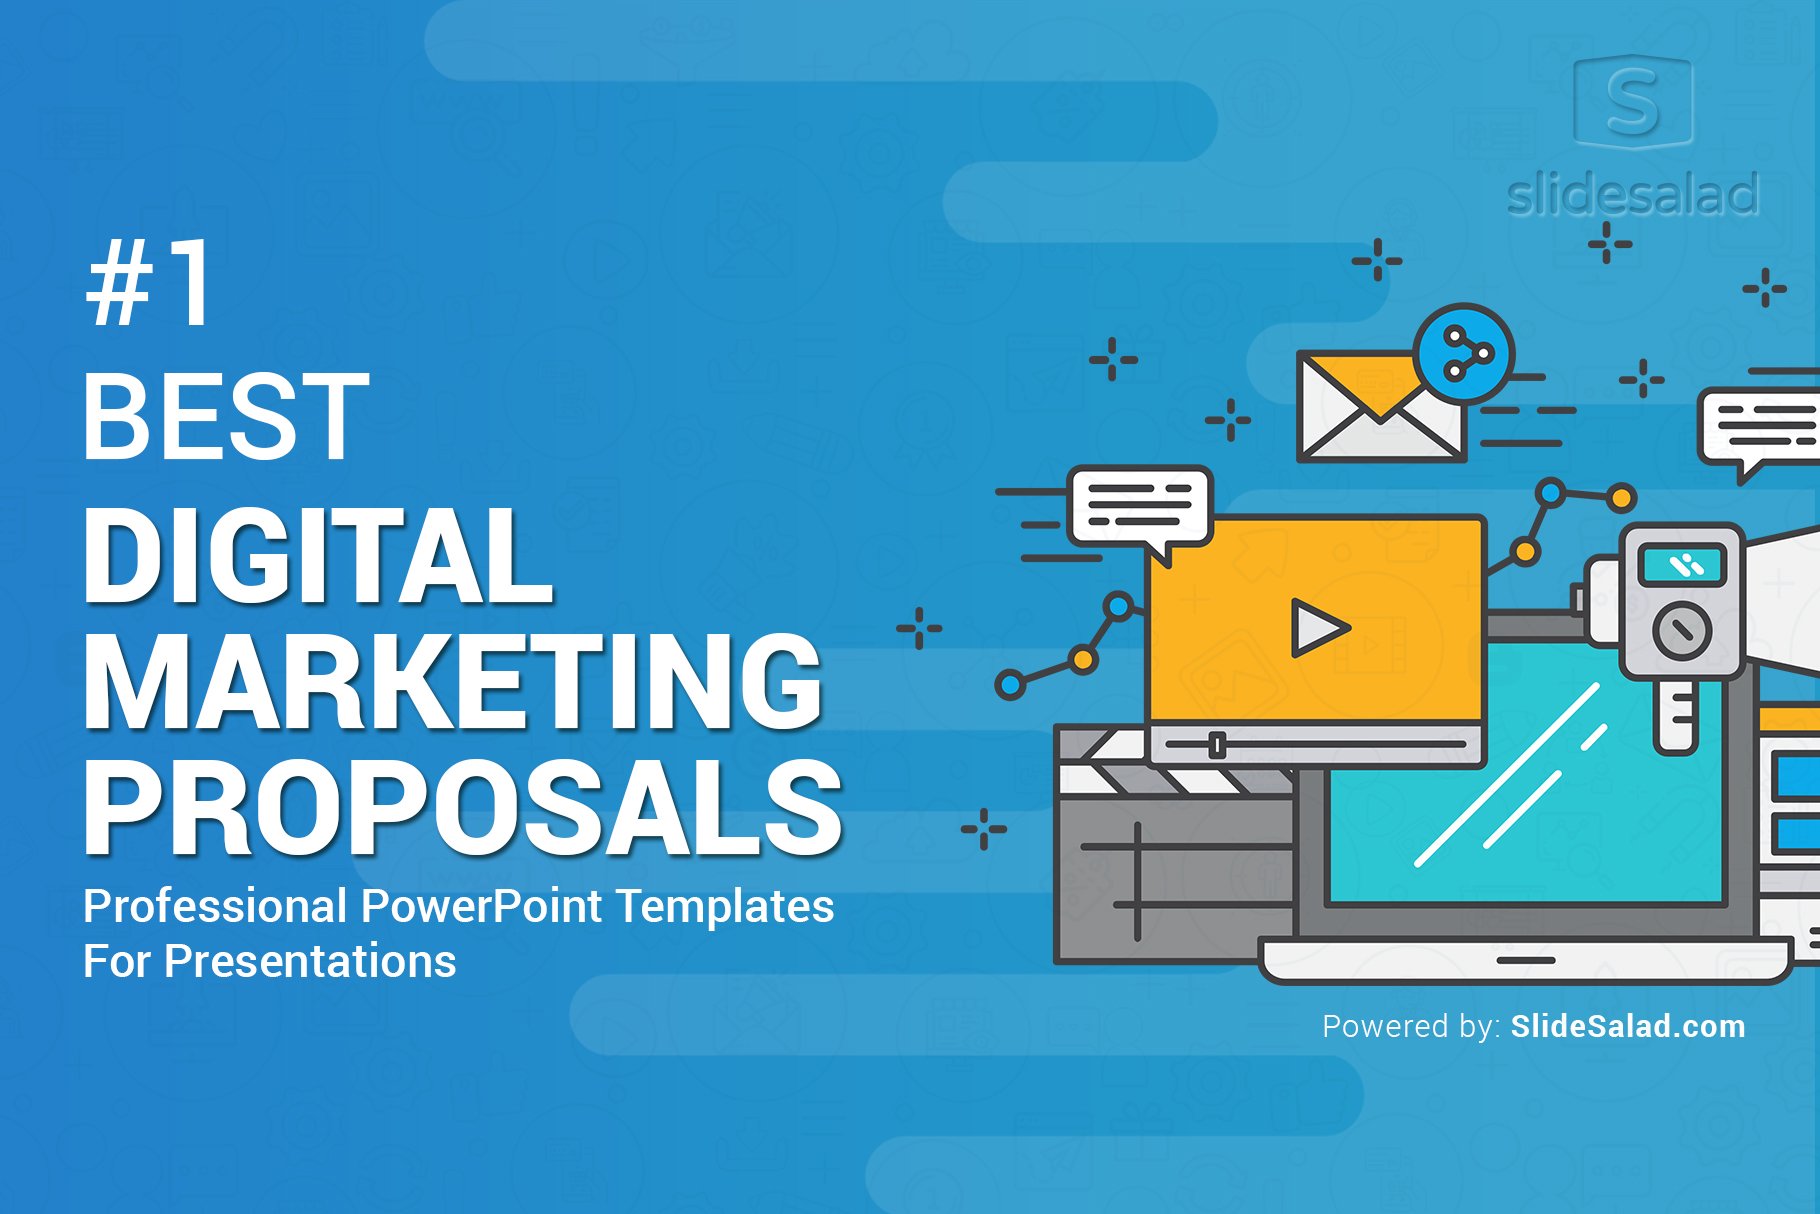 Top Digital Marketing Proposals PPT cover image.